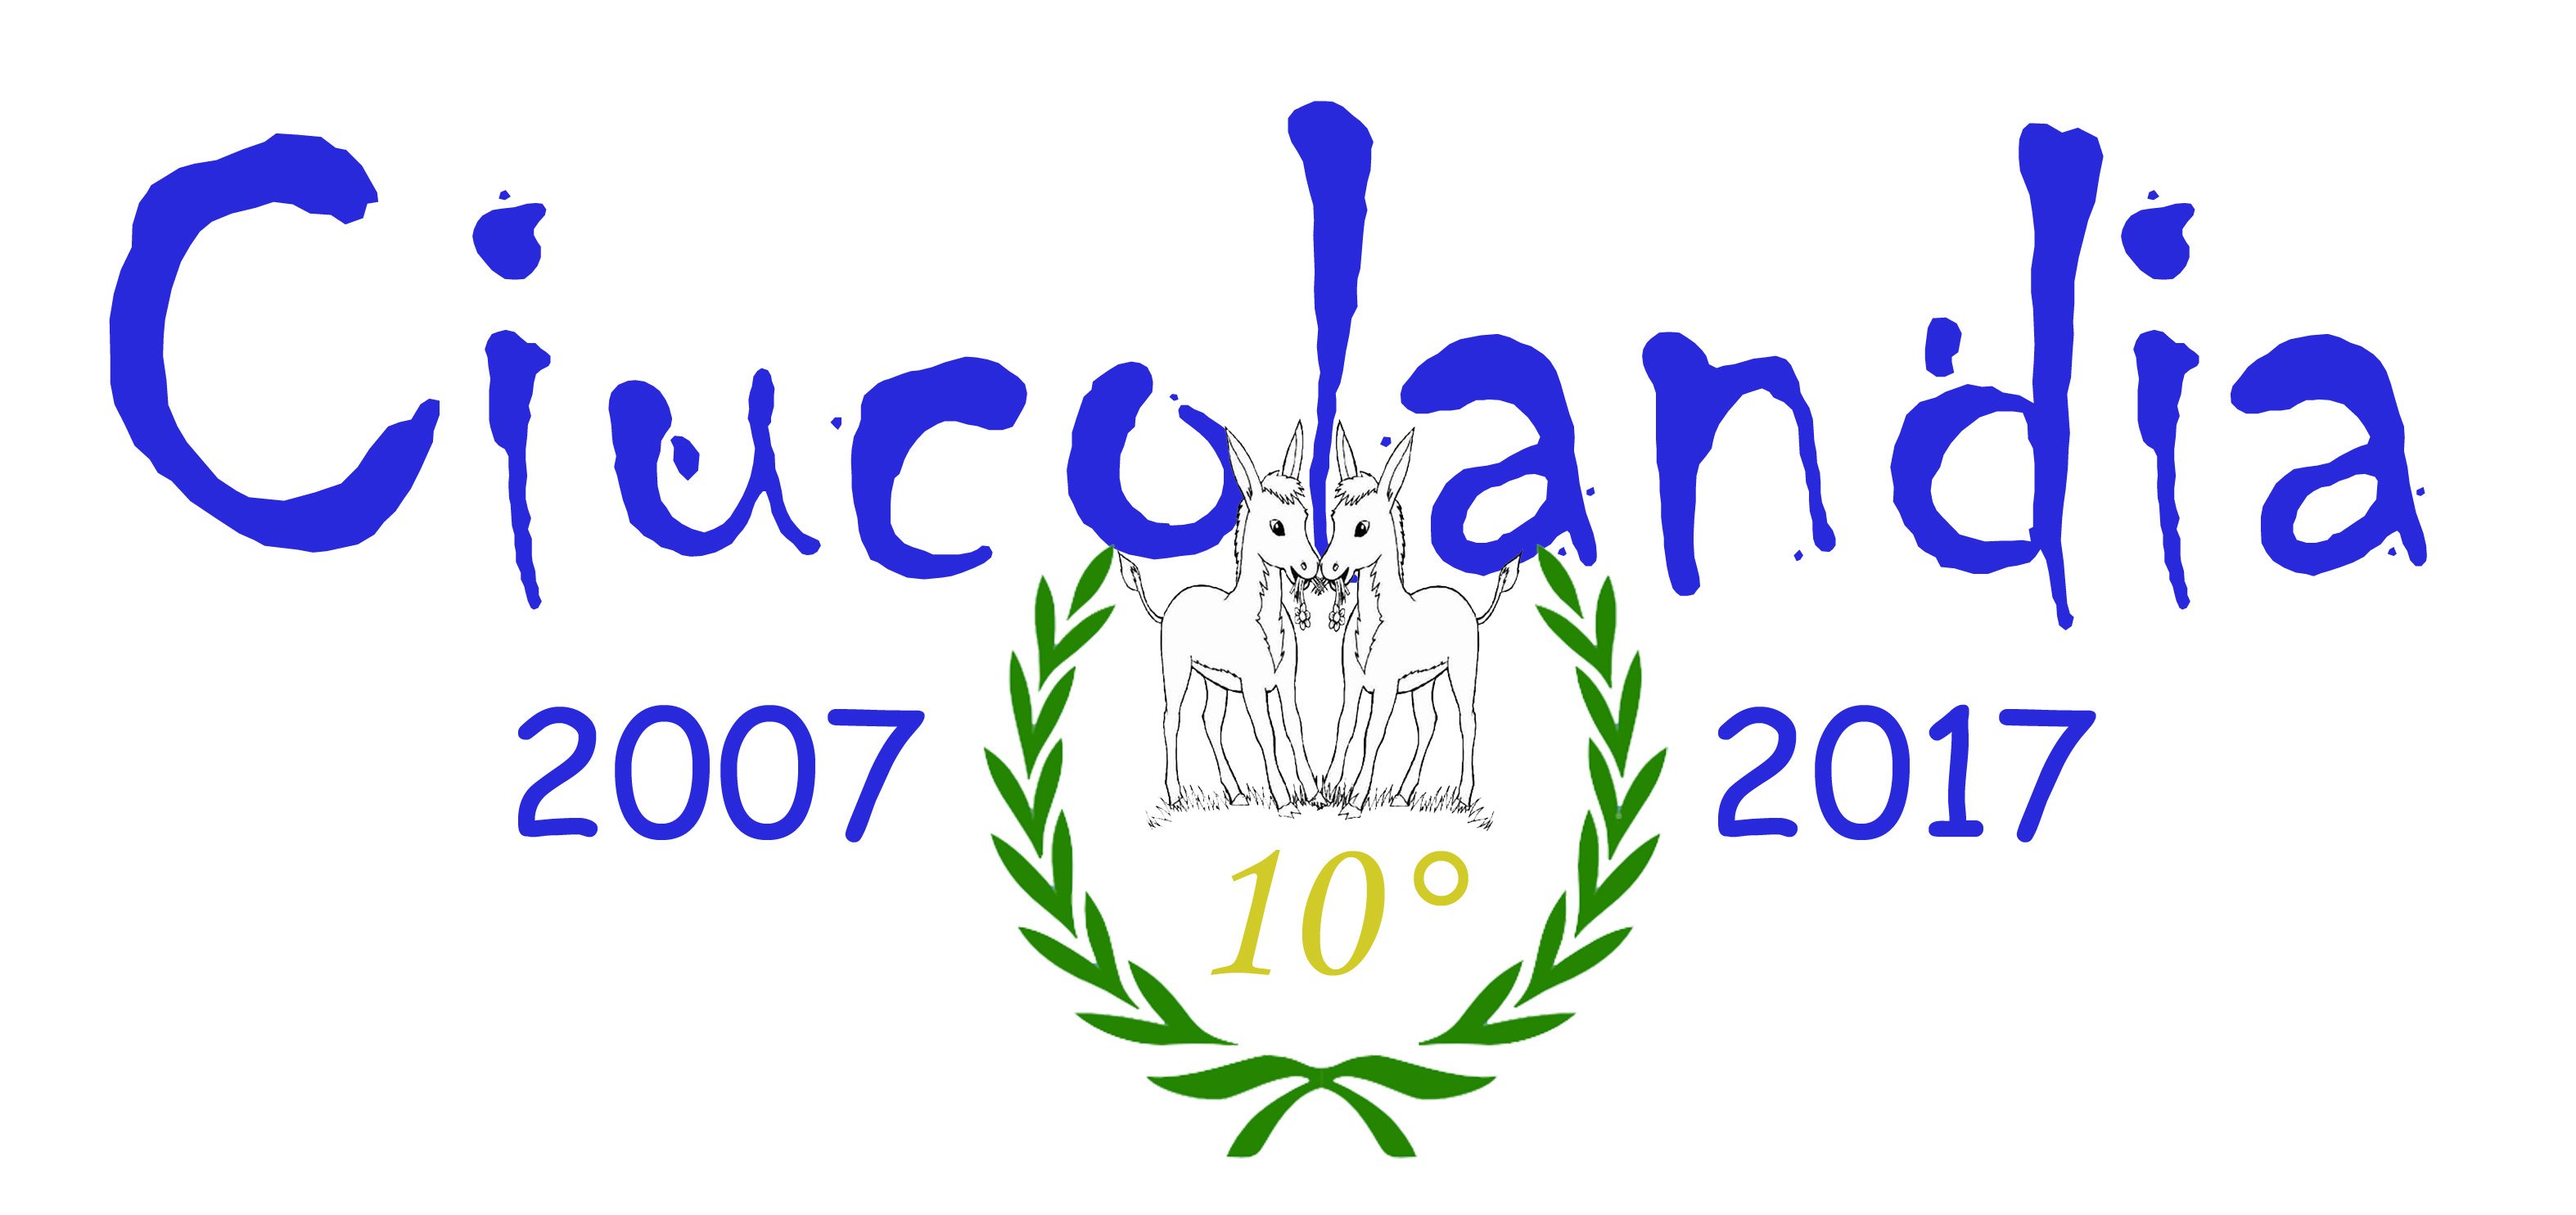 10 anni di ciucolandia 2007 - 2017